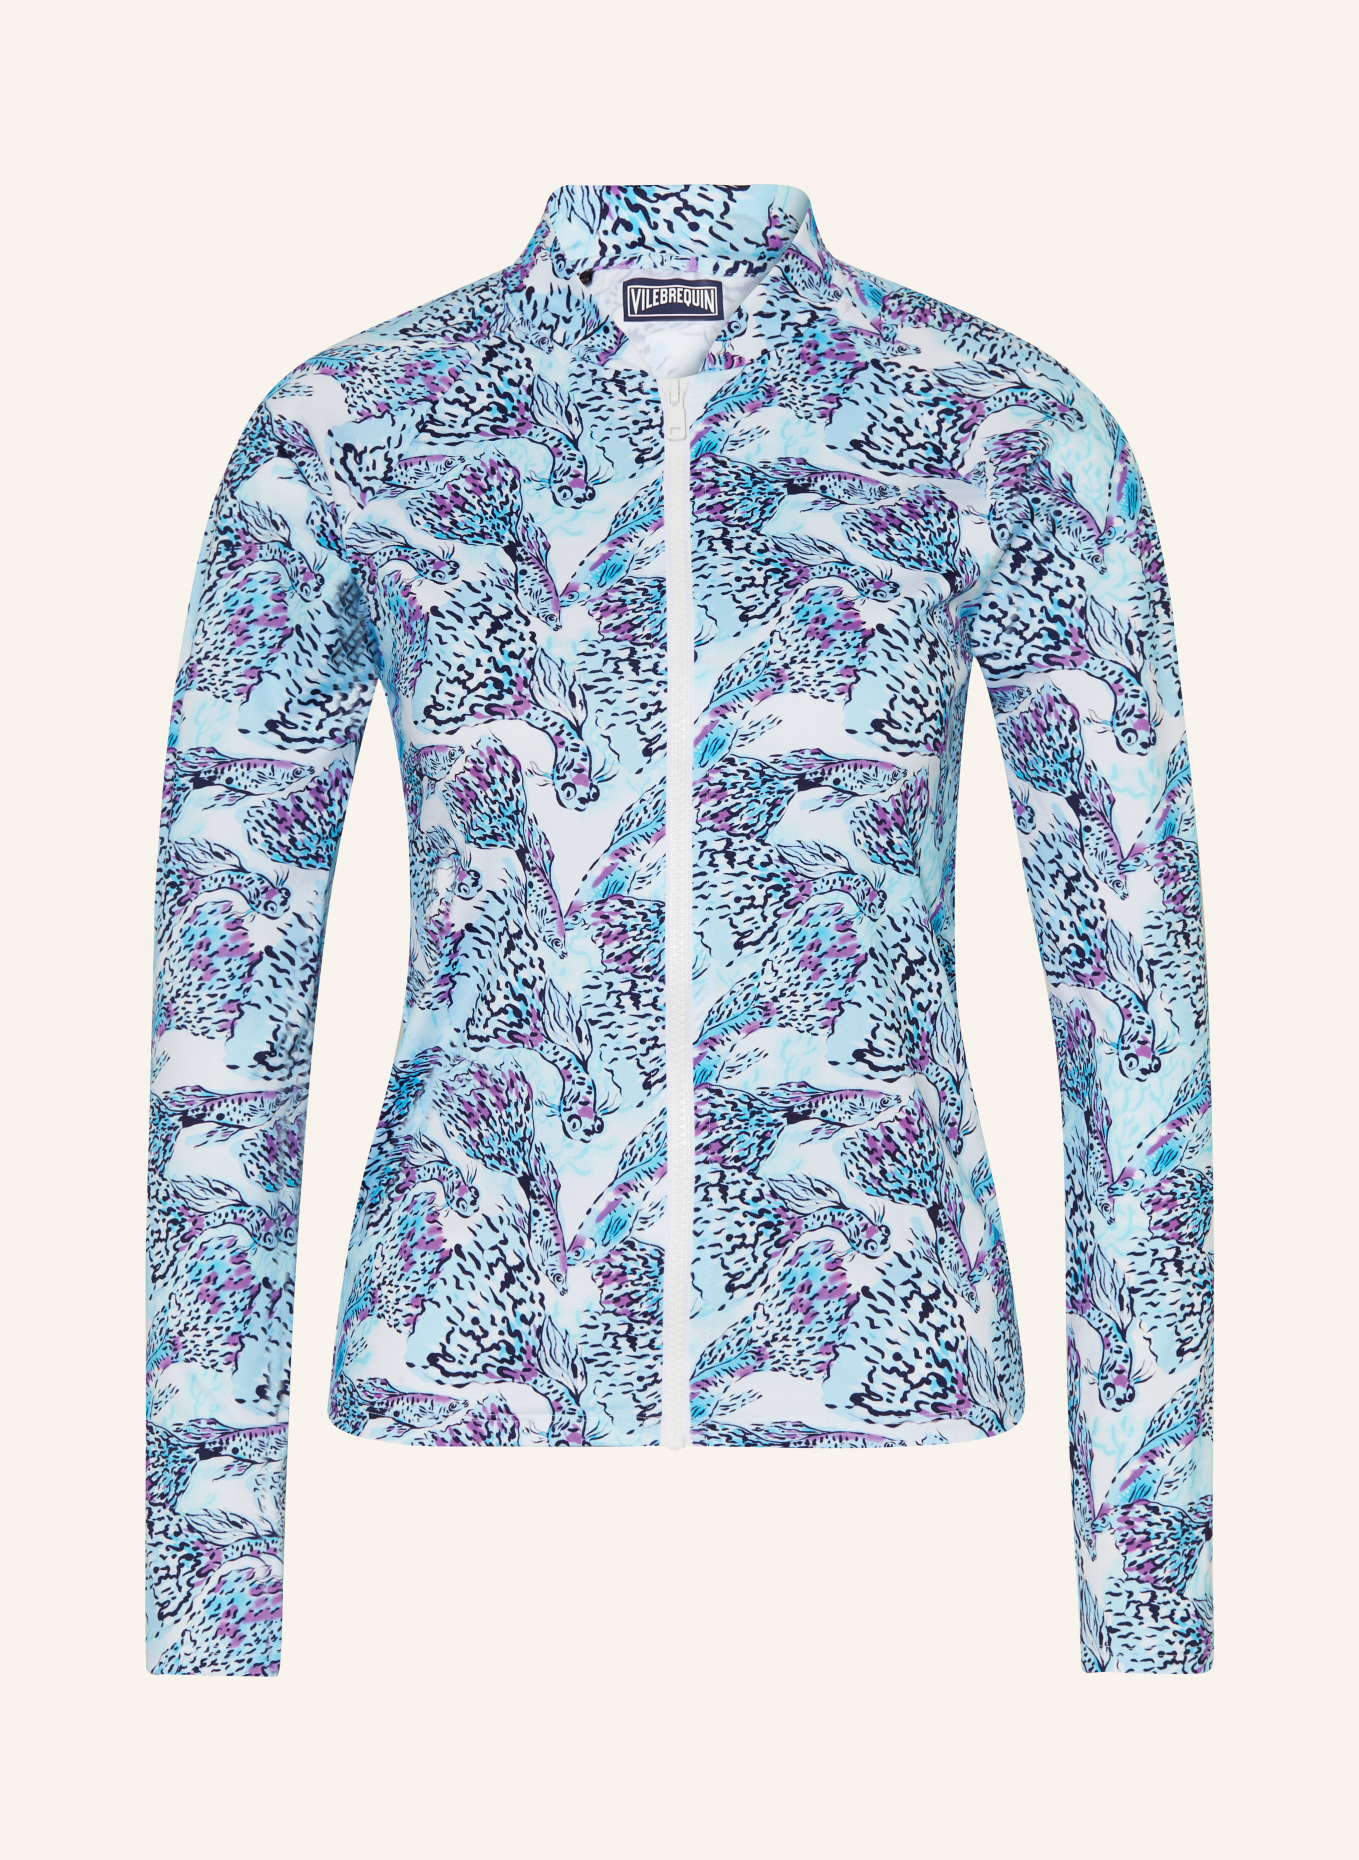 VILEBREQUIN UV-Shirt ISADORA FISH FLYNN-Z mit UV-Schutz 50+, Farbe: HELLBLAU/ DUNKELBLAU/ FUCHSIA (Bild 1)